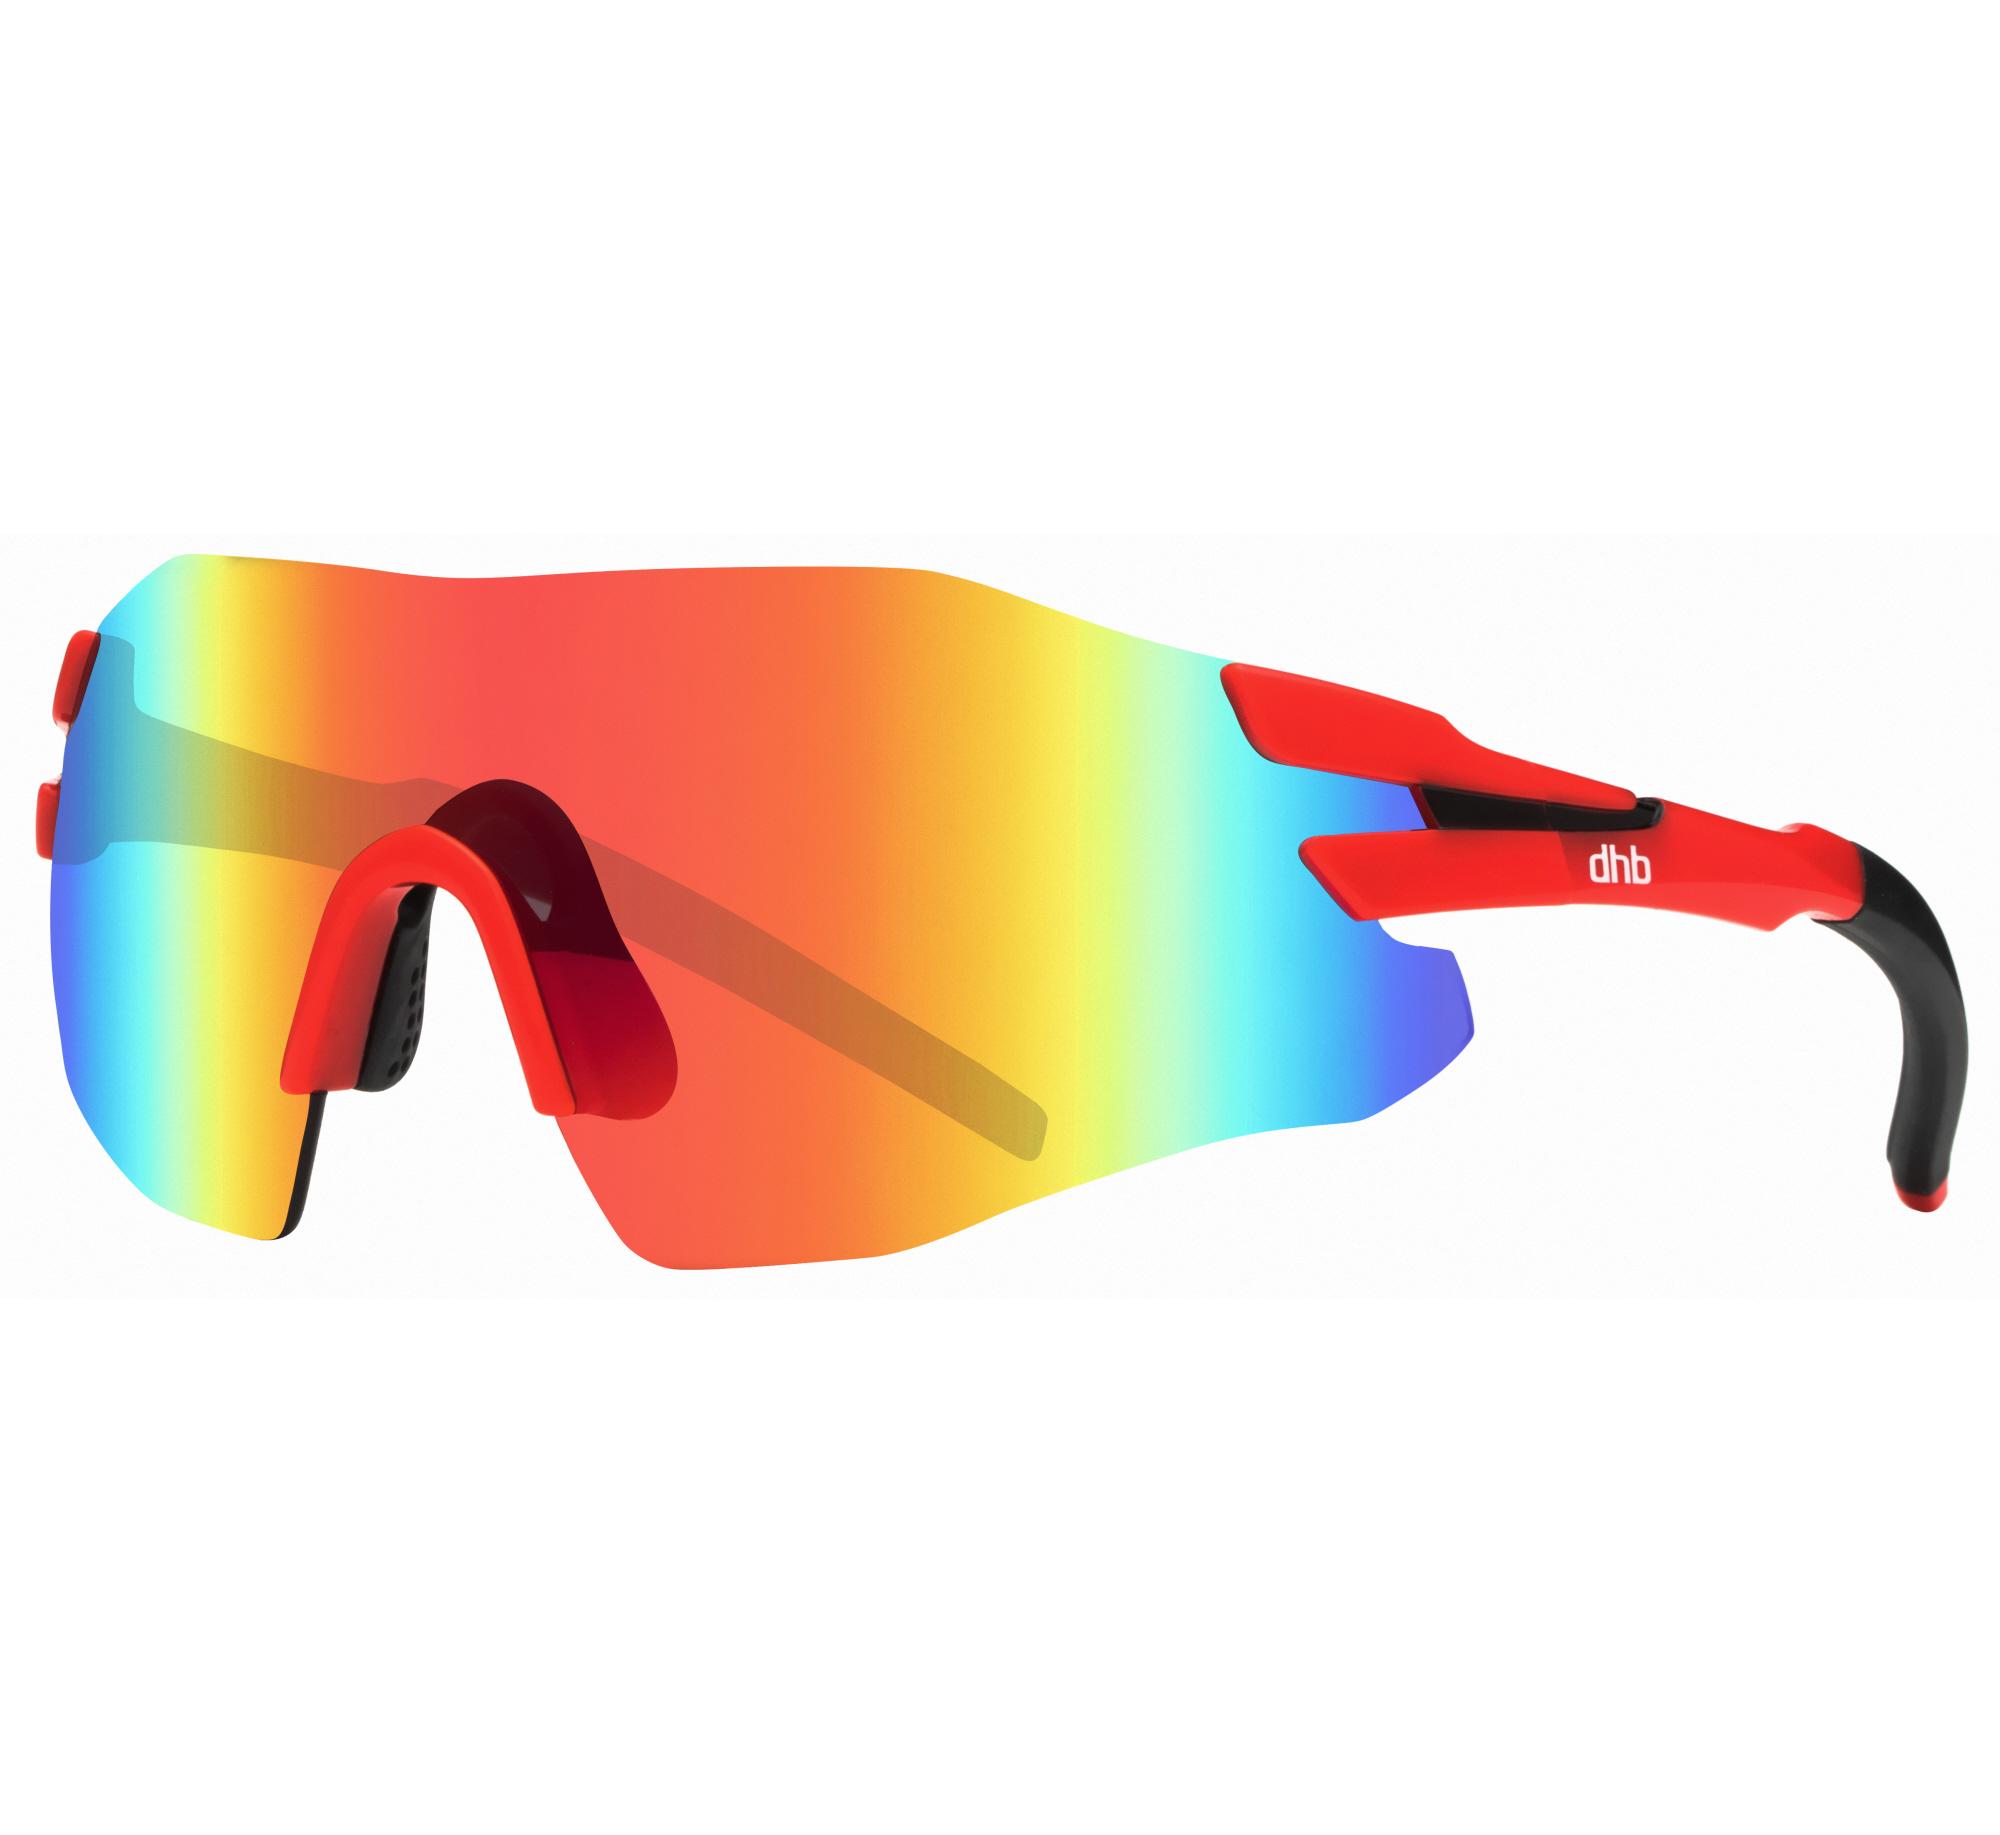 Dhb Aeron Frameless Sunglasses - Red/black